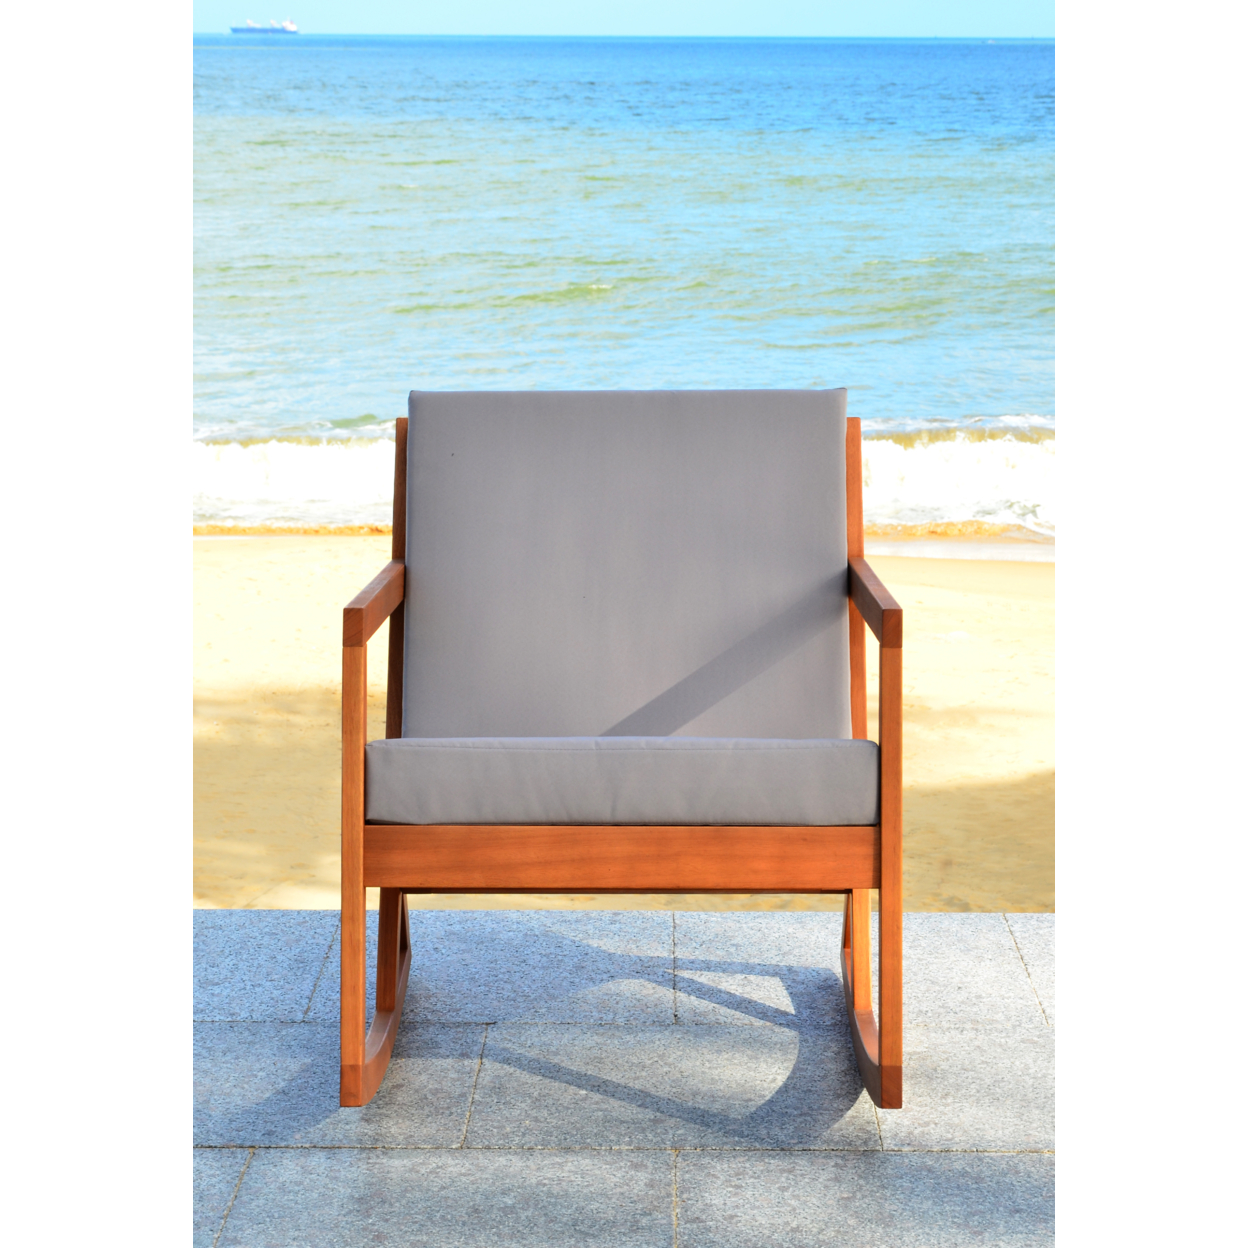 SAFAVIEH Outdoor Collection Vernon Rocking Chair Natural/Grey